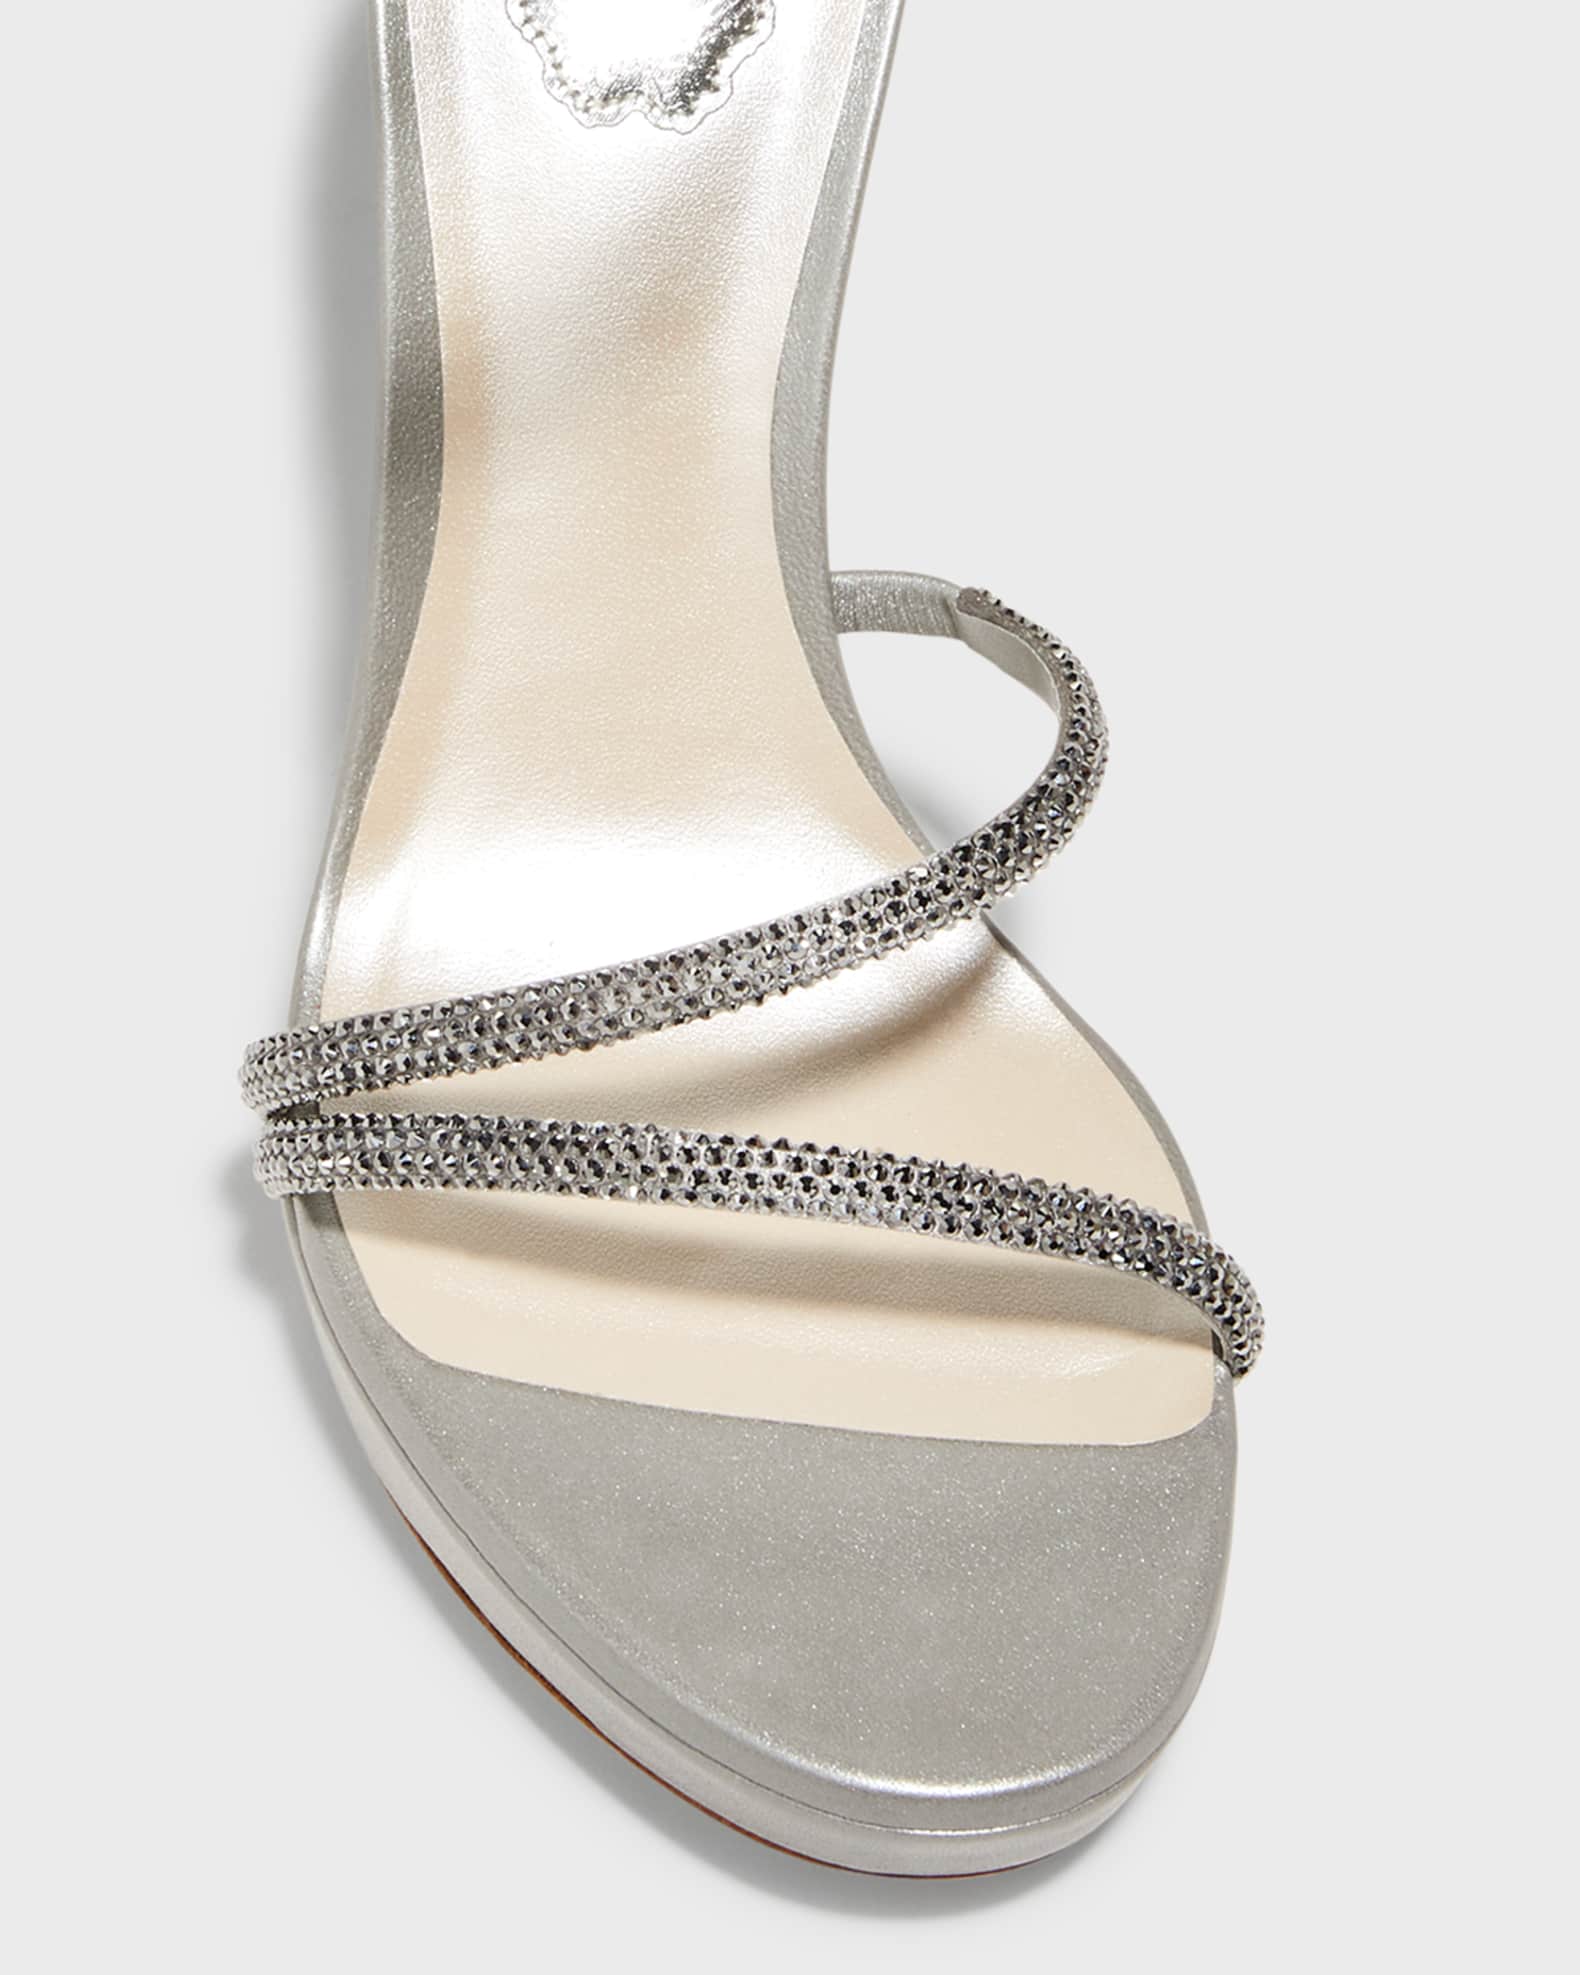 Rene Caovilla Strass Snake-Wrap Platform Sandals | Neiman Marcus